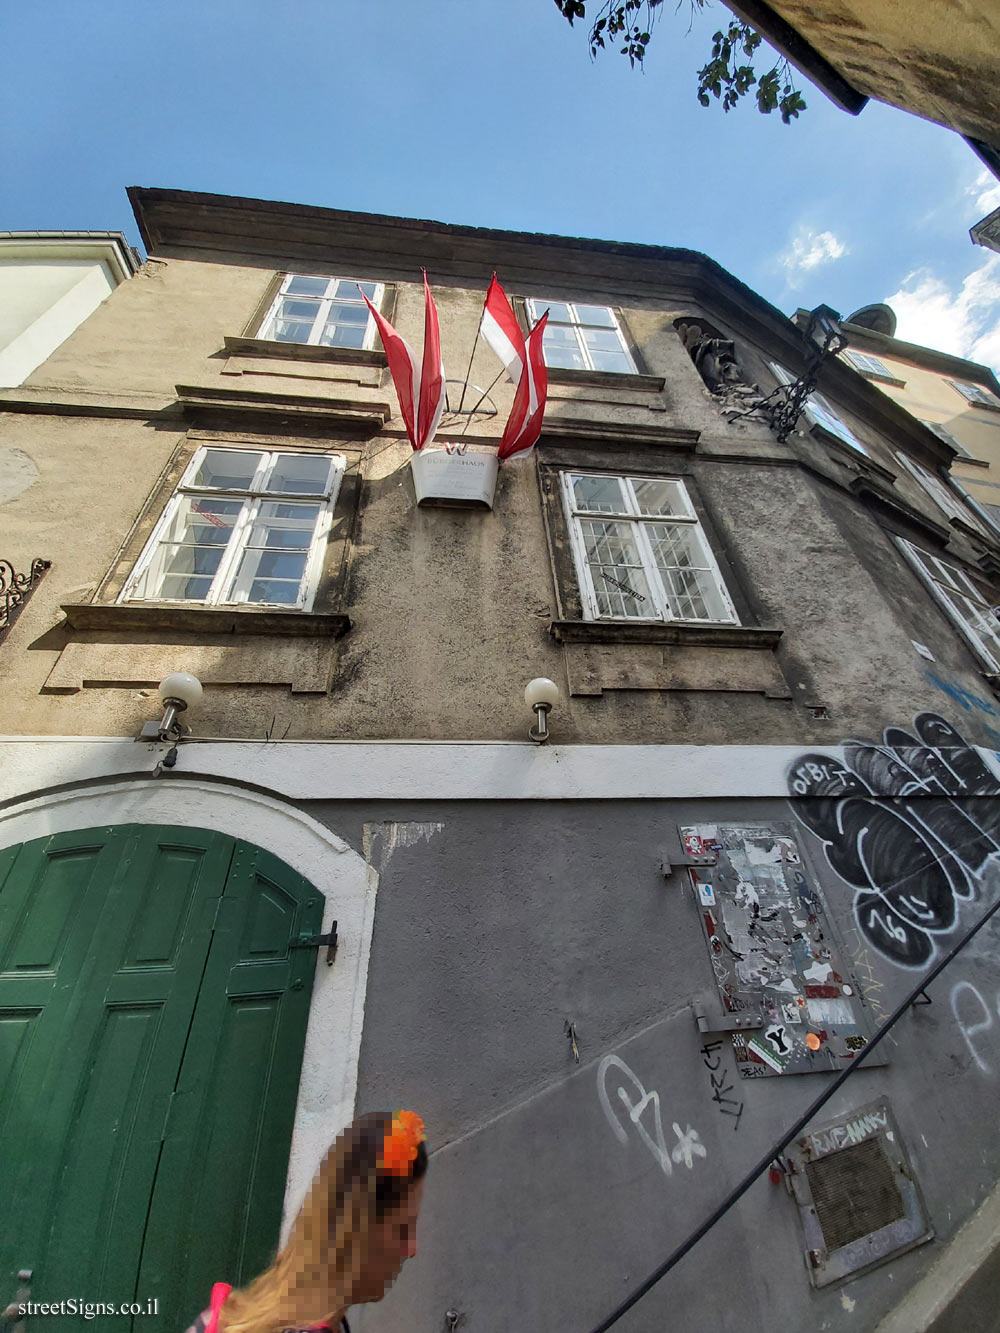 Vienna - A city introduces itself - Town House - Griechengasse 5, 1010 Wien, Austria